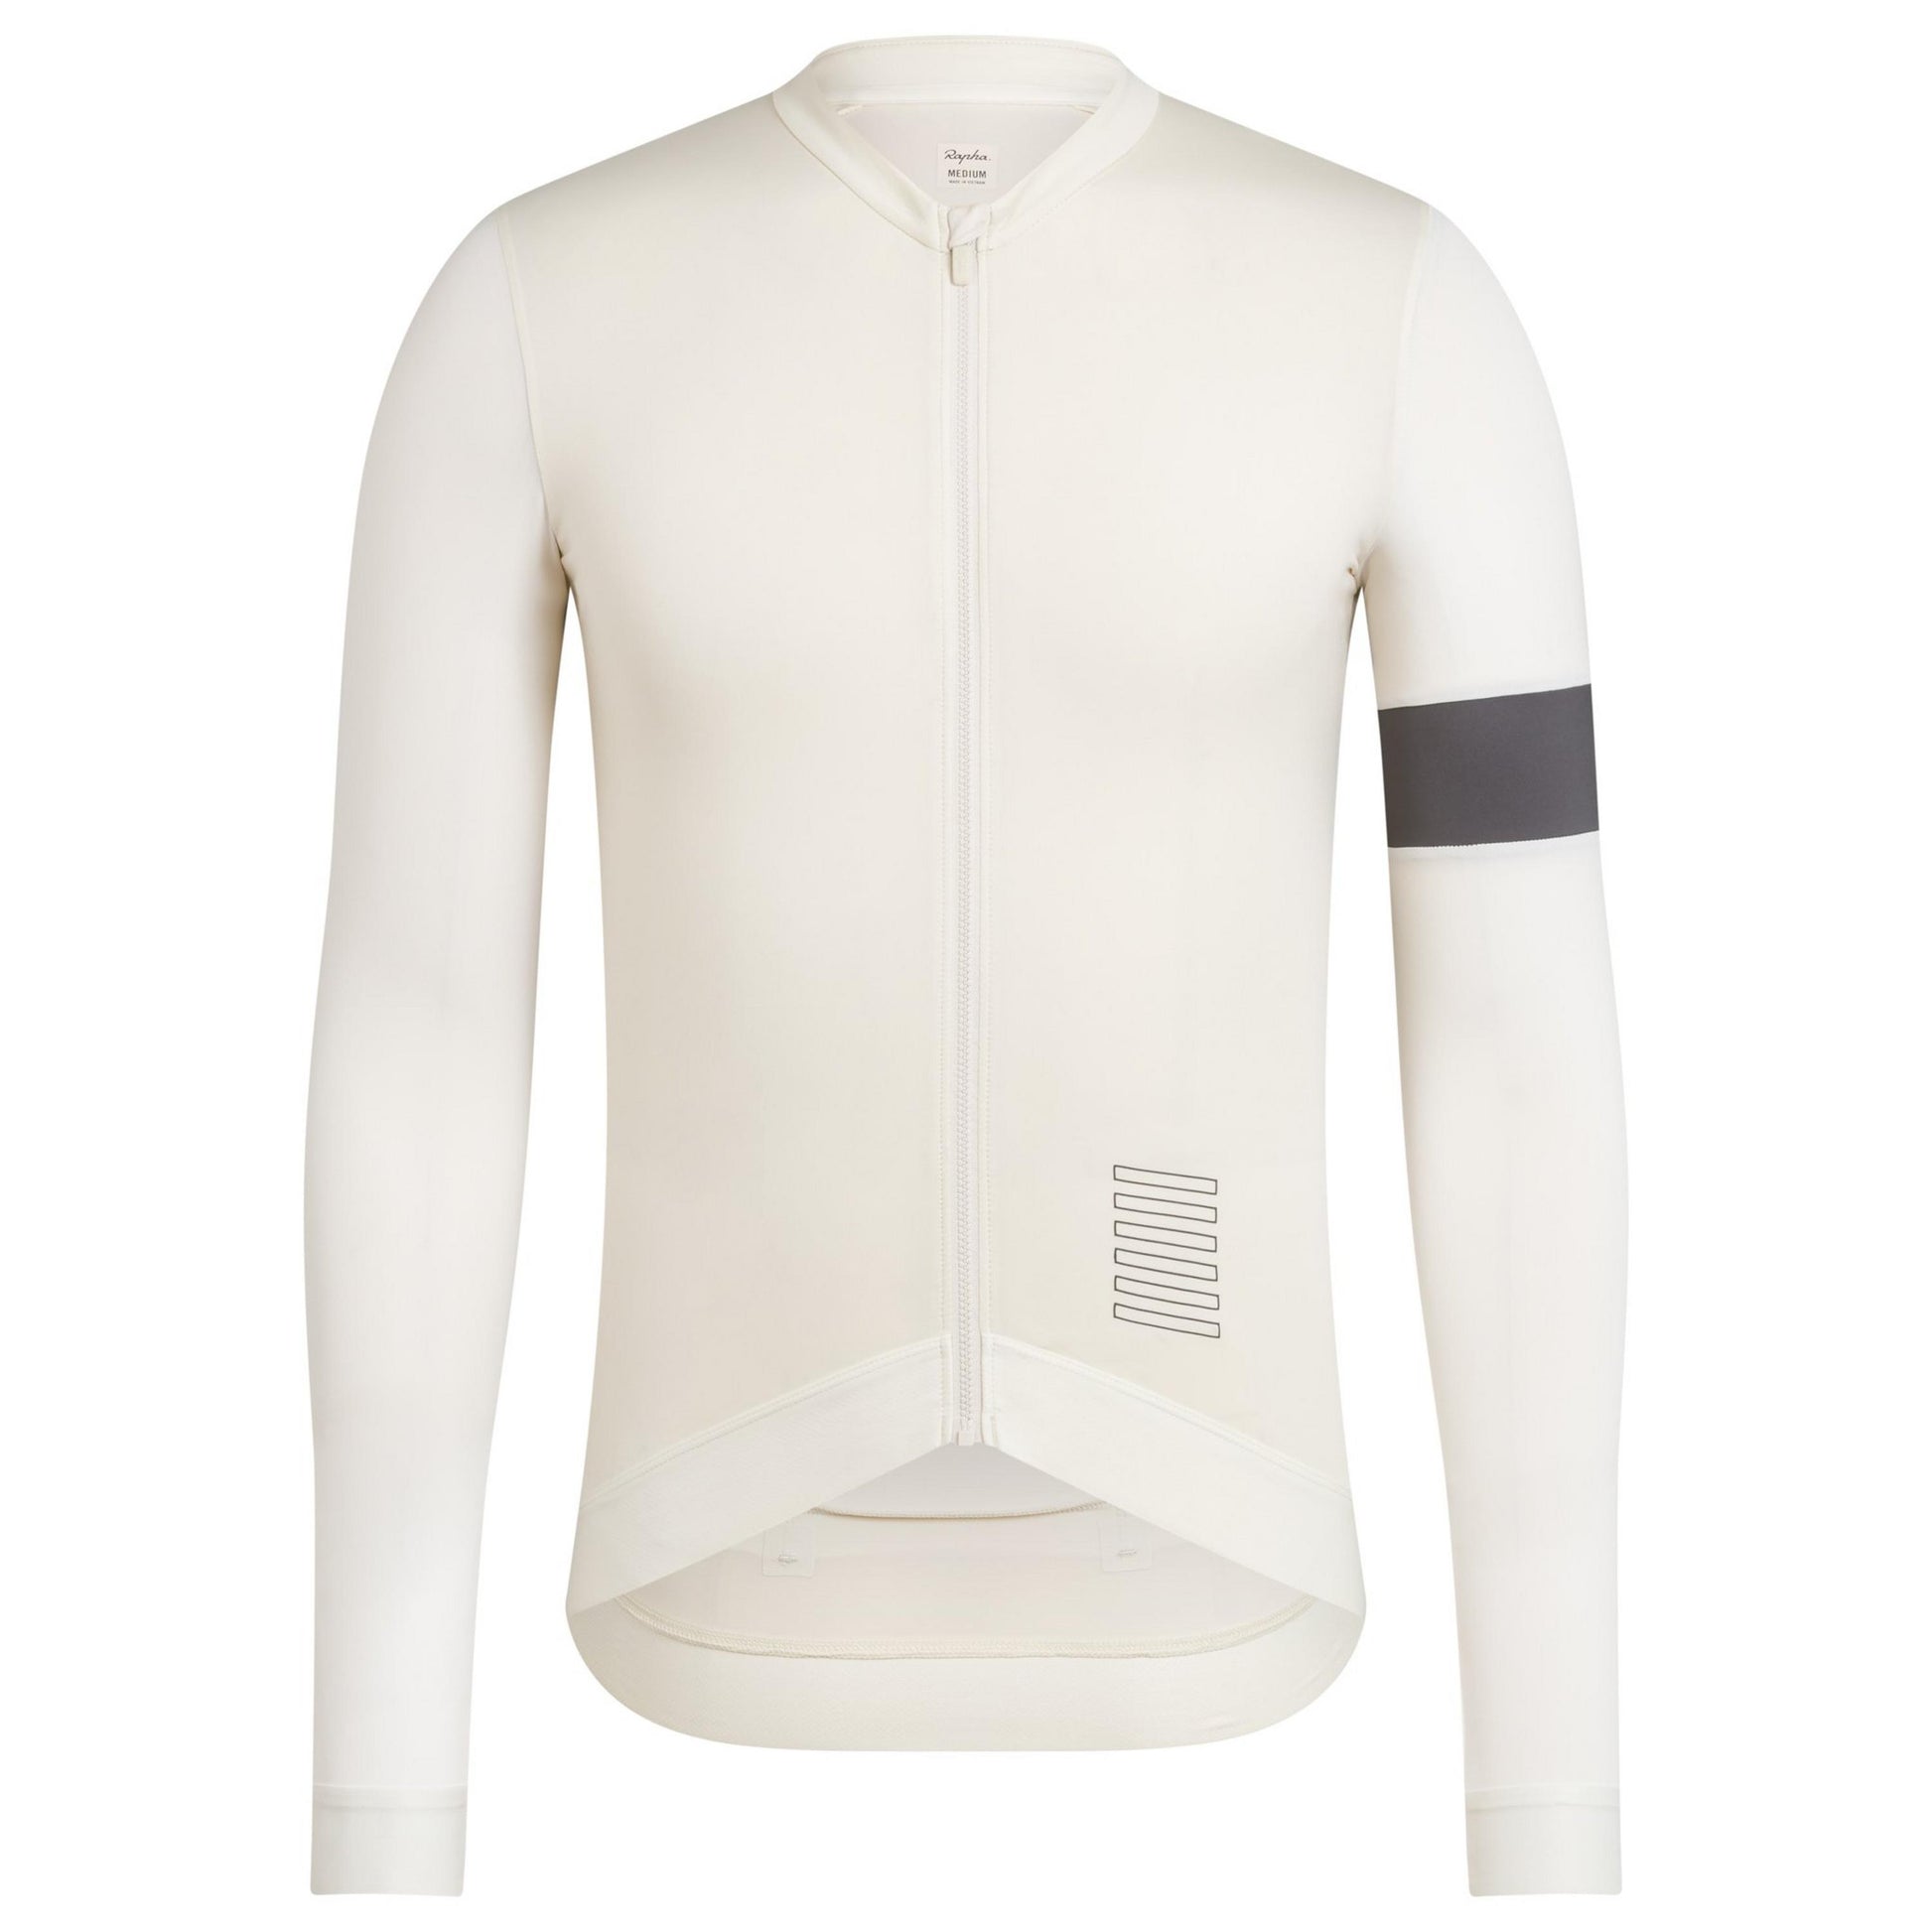 Rapha Mens Pro Team Long Sleeve Training Jersey - Off White buy online at Woolys Wheels bike shop Sydney